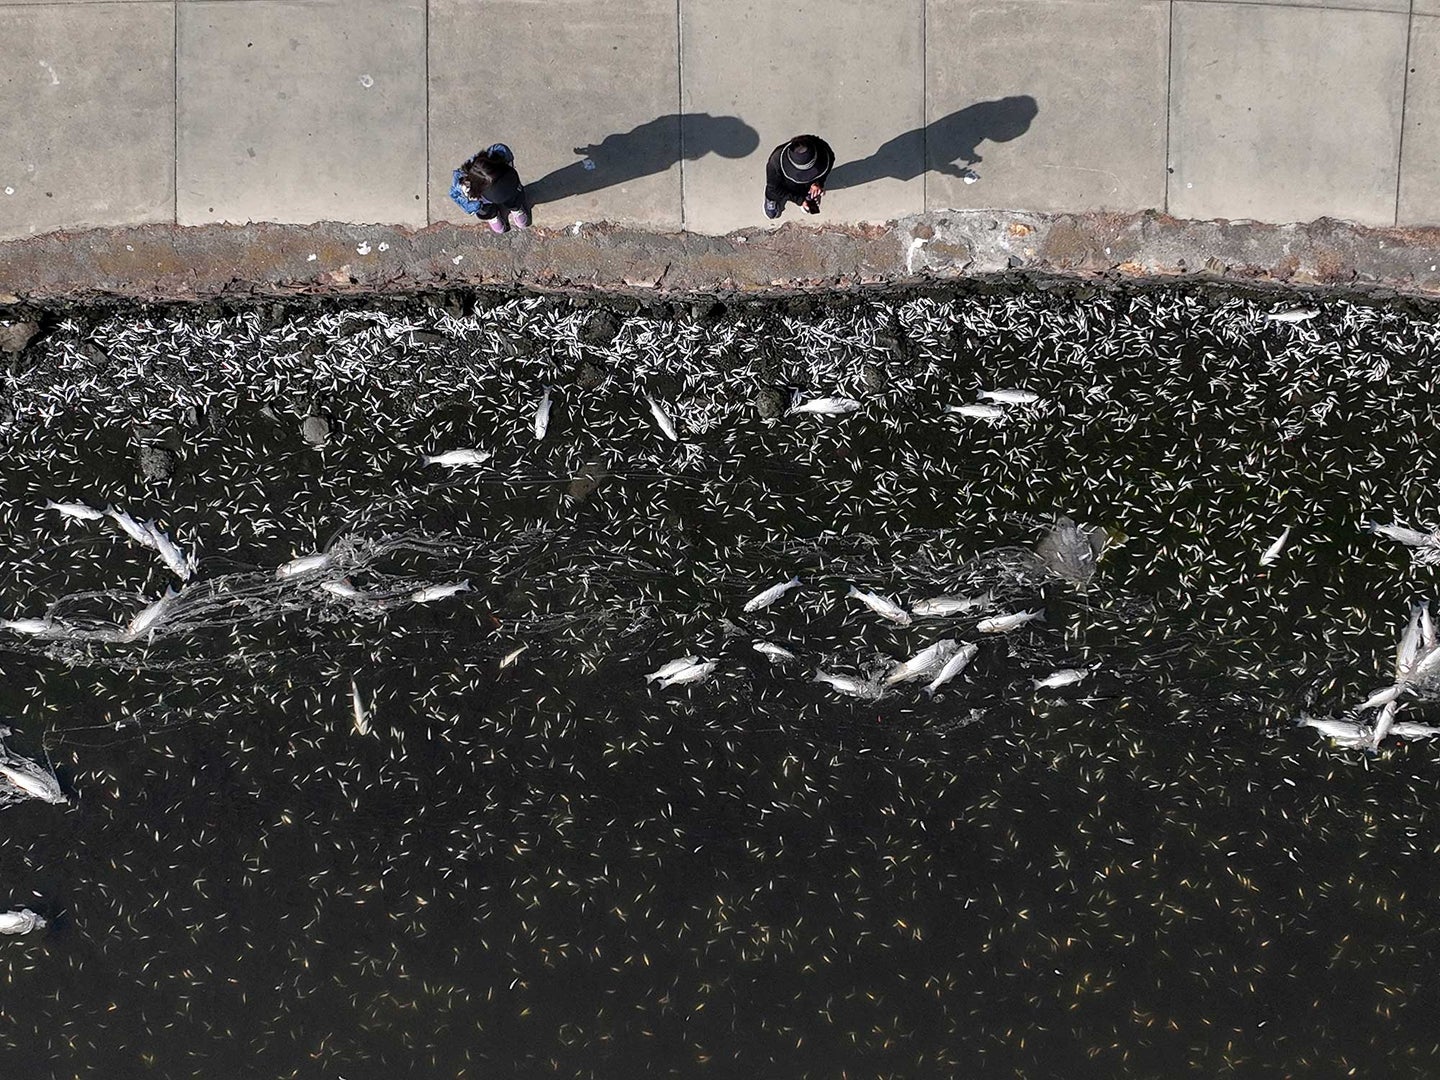 Fish kill in Lake Merritt, Oakland, California, from algae bloom seen from above